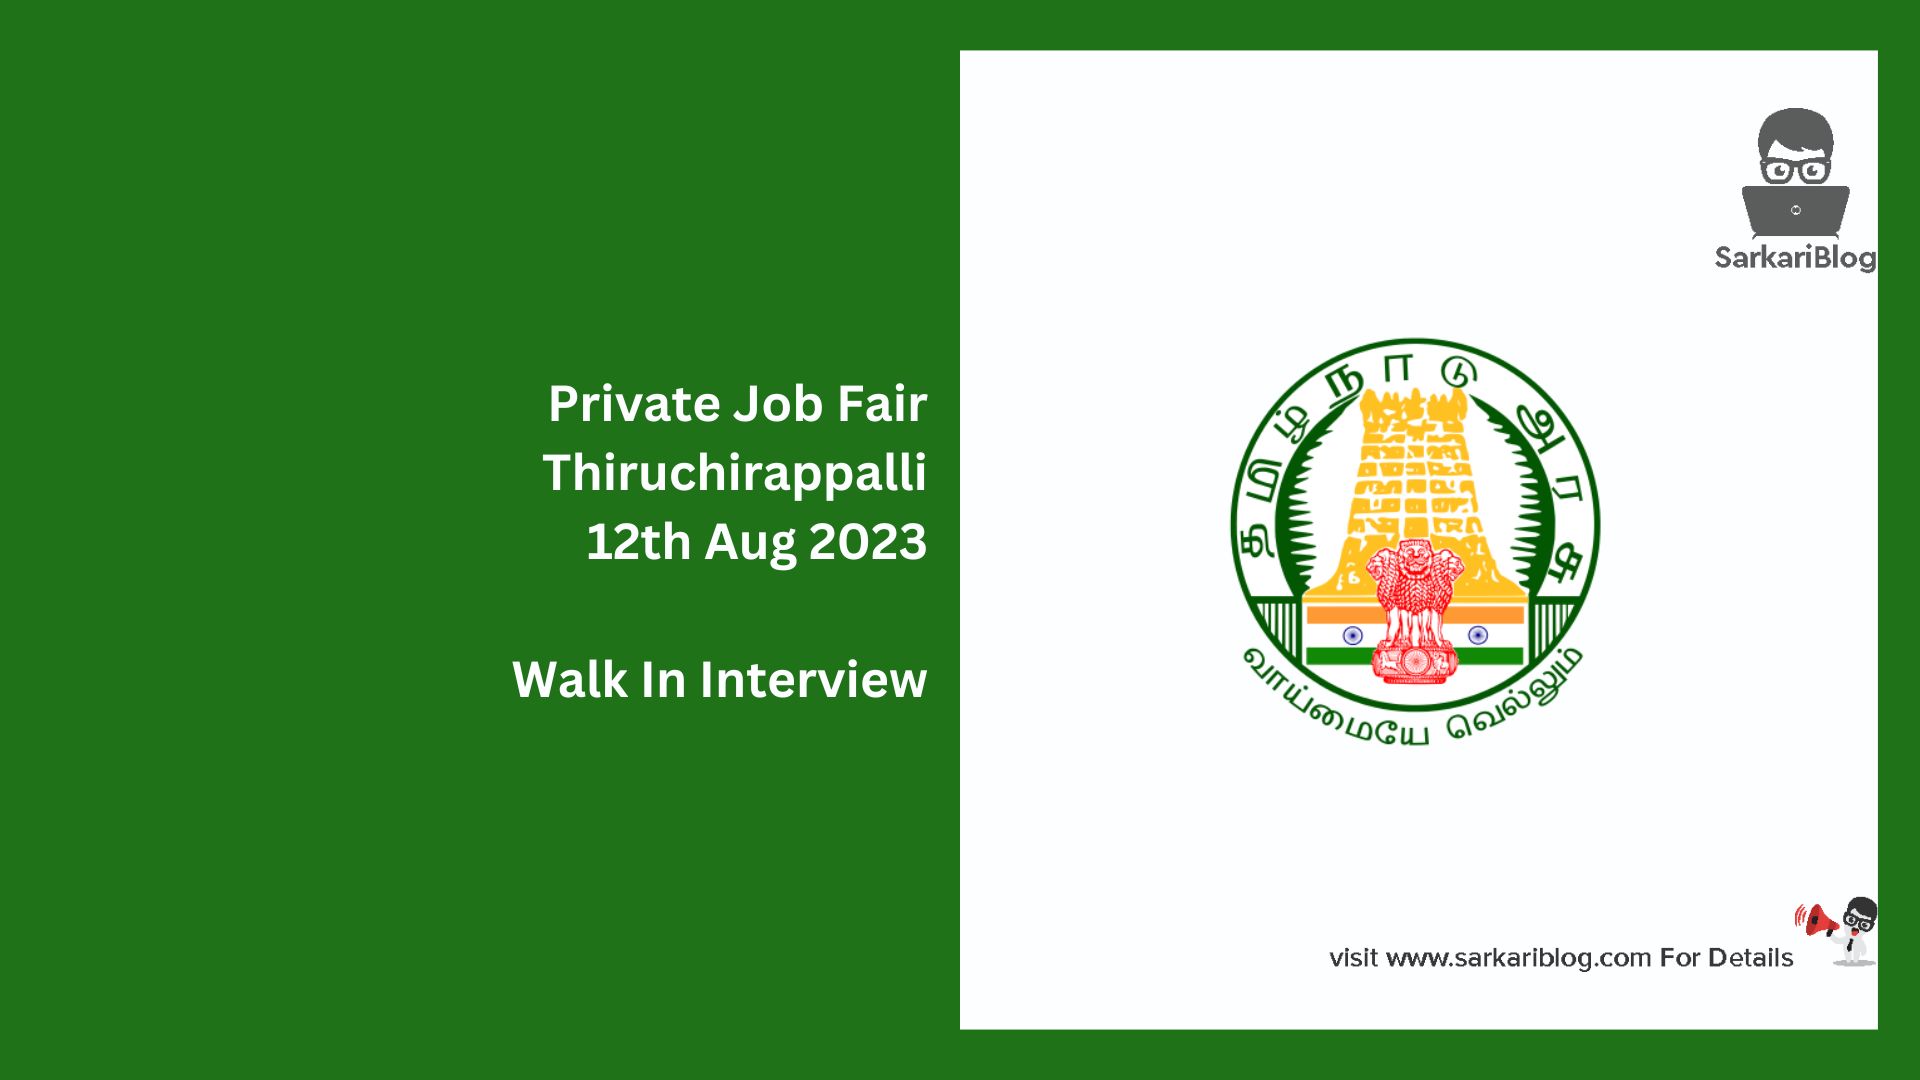 Private Job Fair Thiruchirappalli 12th Aug 2023